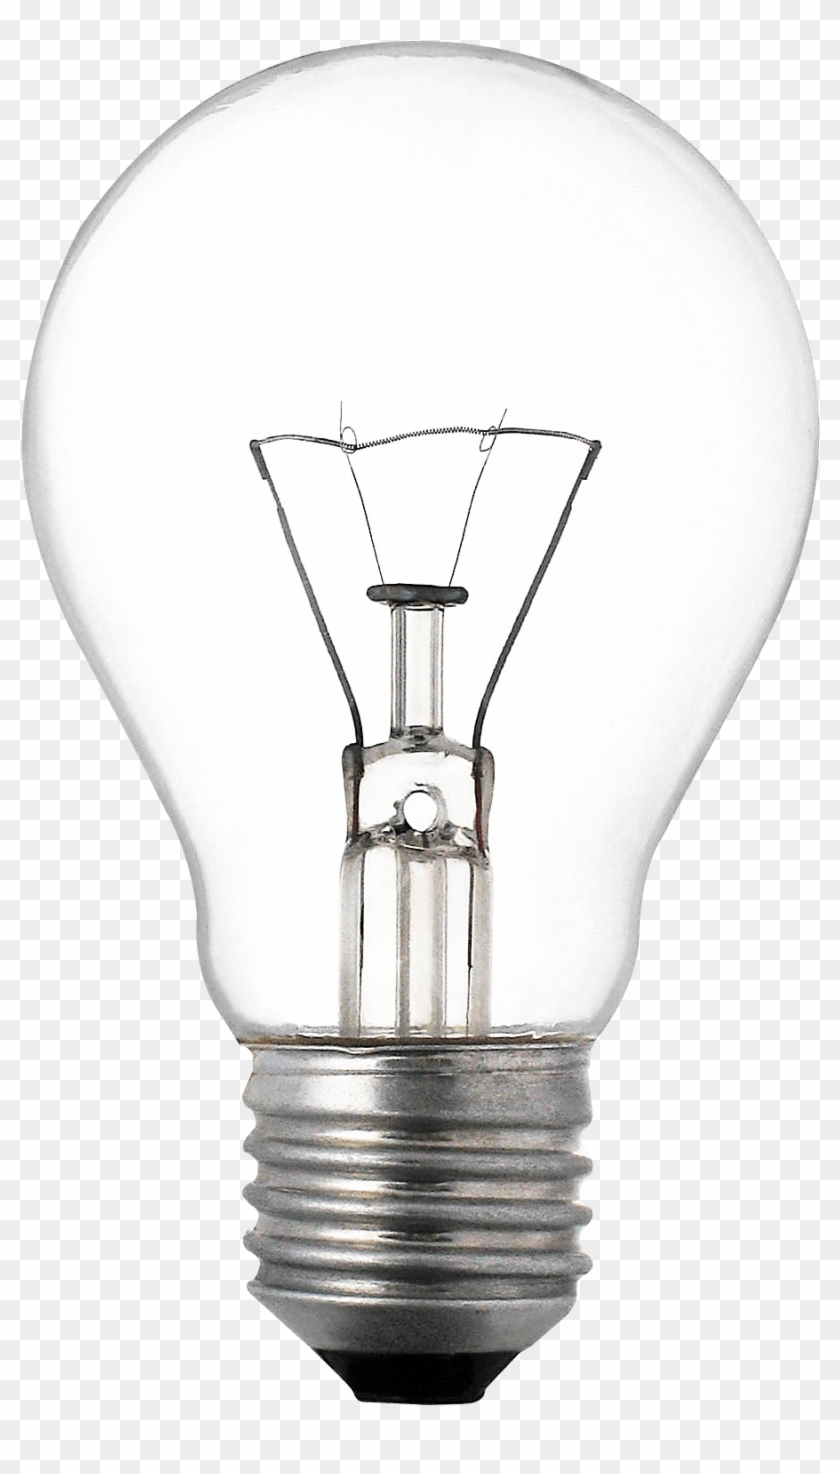 Light Bulb Png Transparent Image Pngpix - Incandescent Light Bulb Clipart